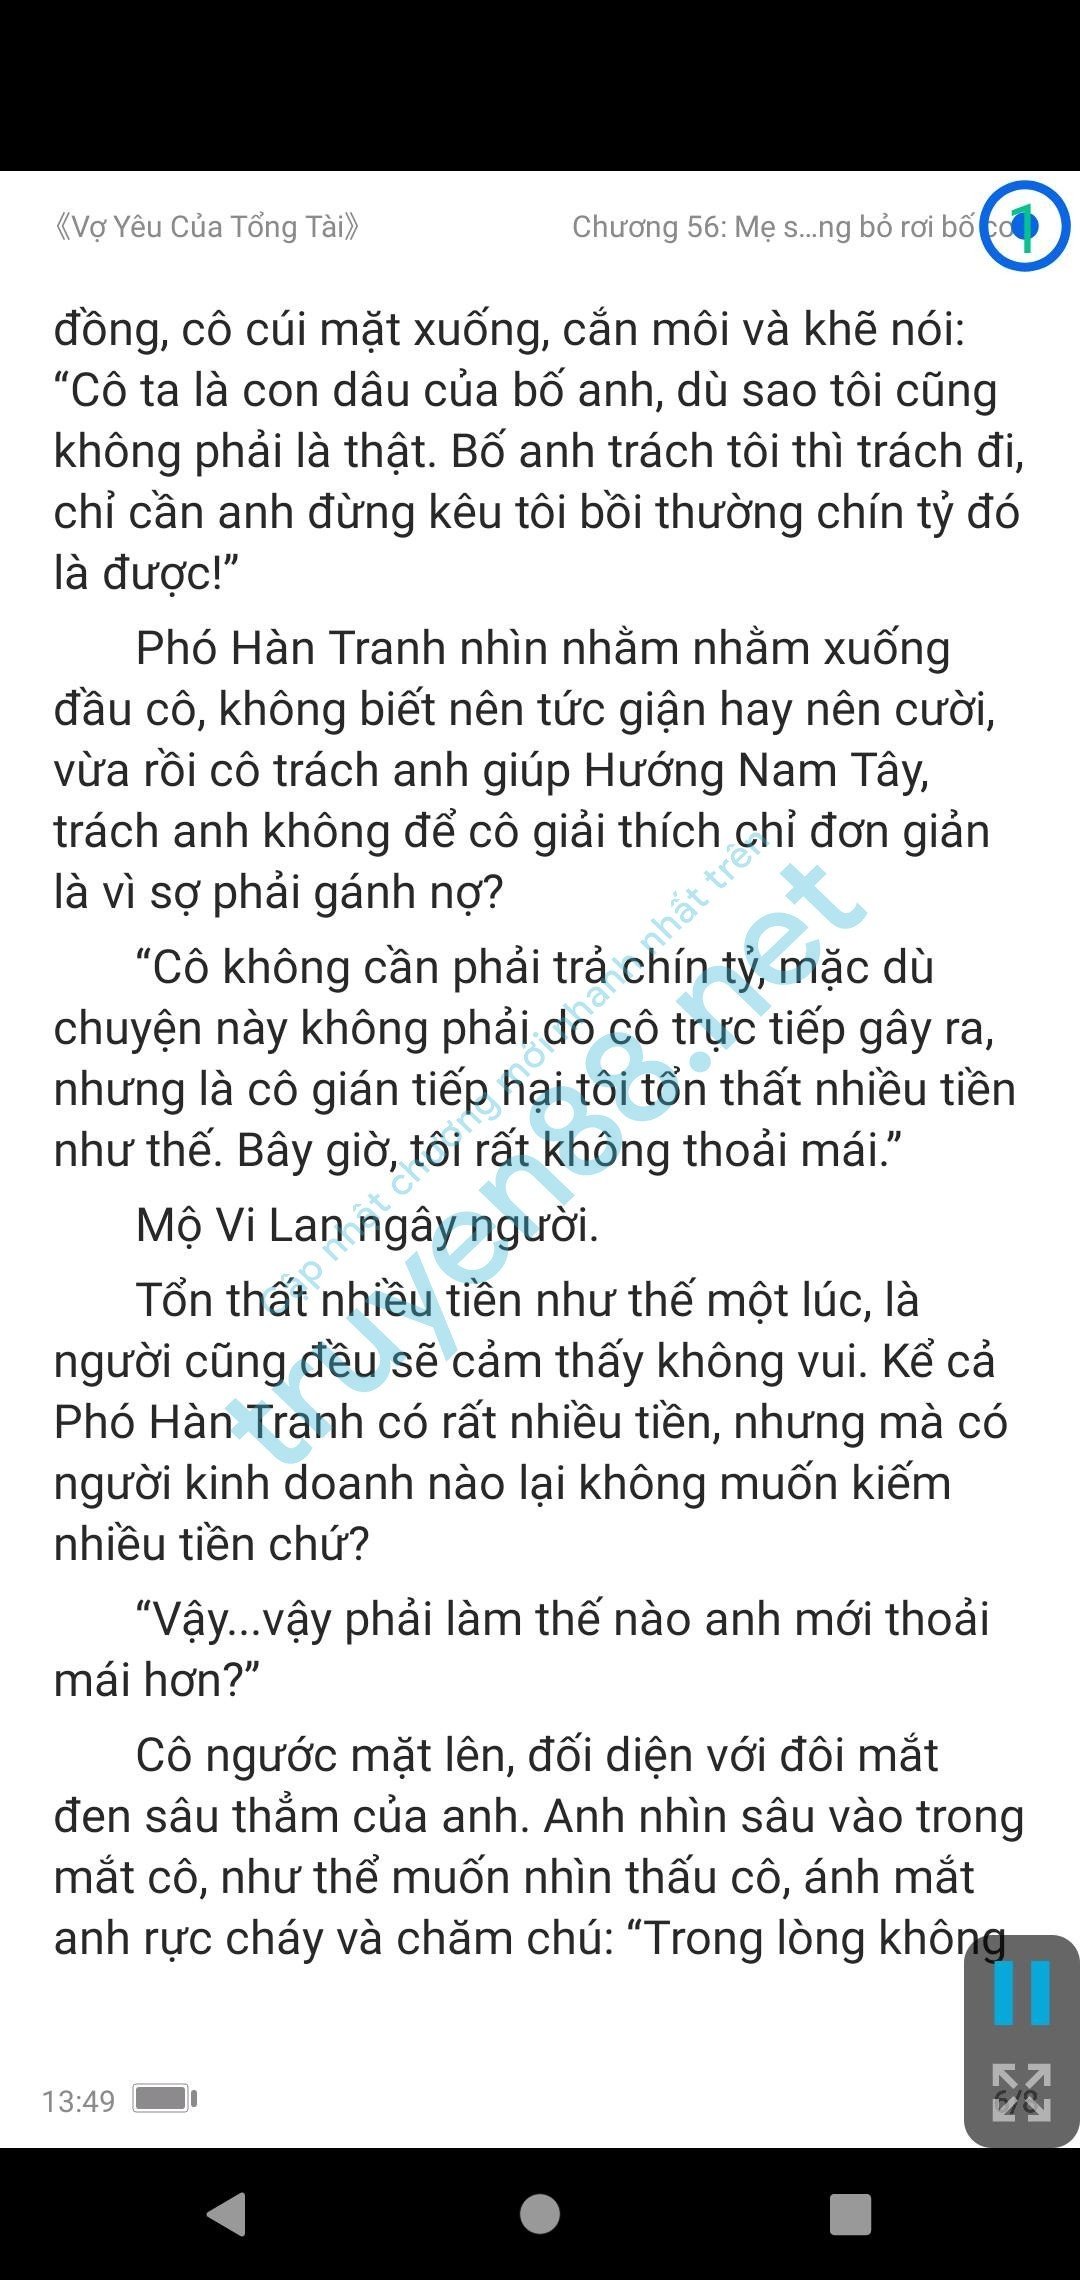 vo-yeu-cua-tong-tai-mo-vi-lan--pho-han-tranh-56-0